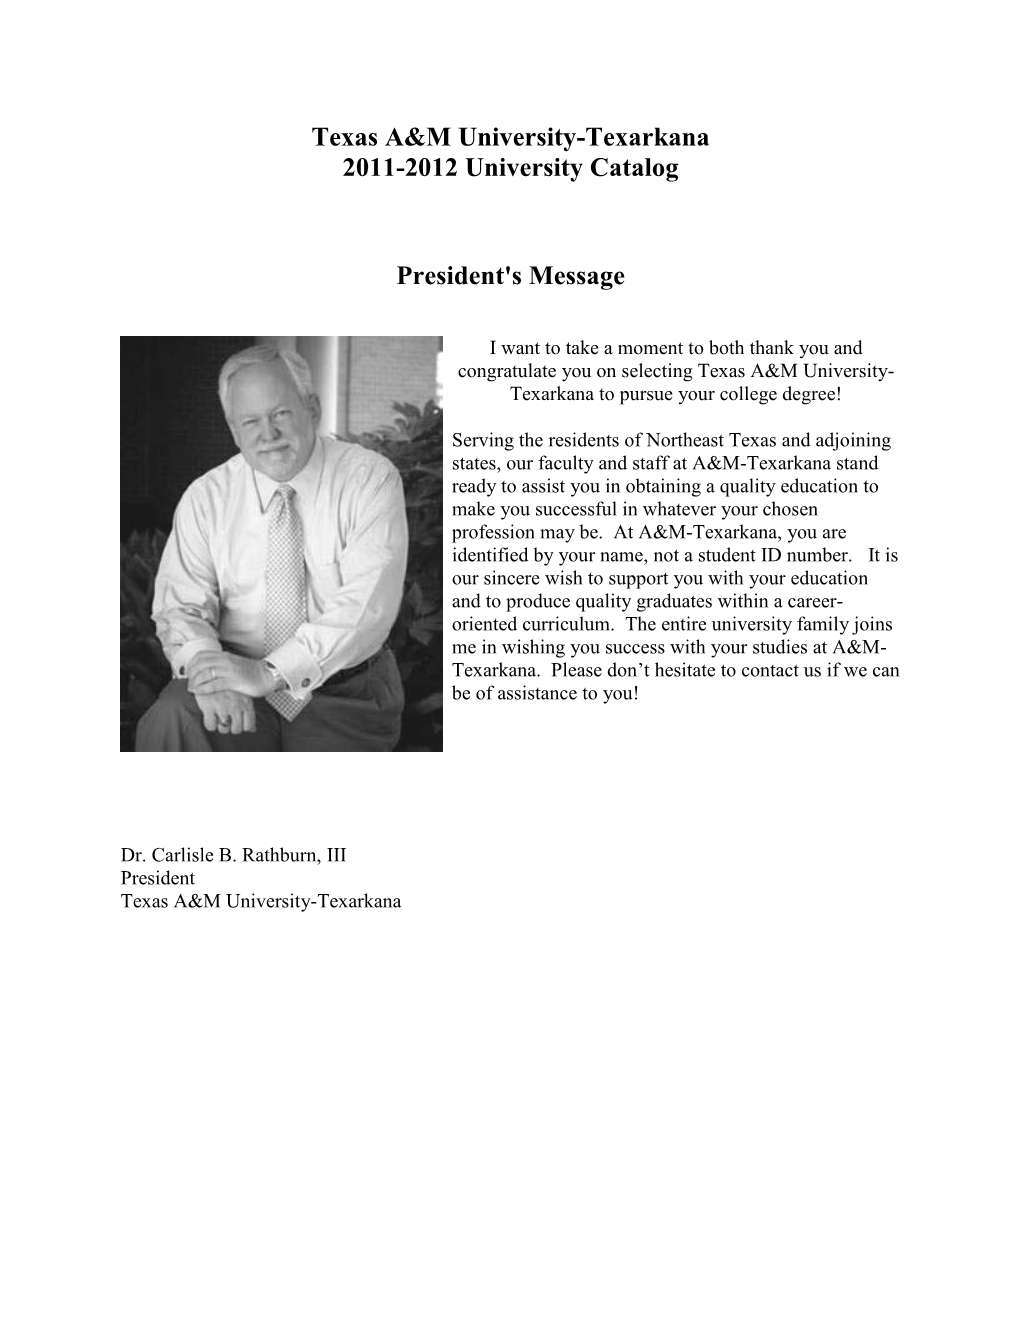 Texas A&M University-Texarkana 2011-2012 University Catalog